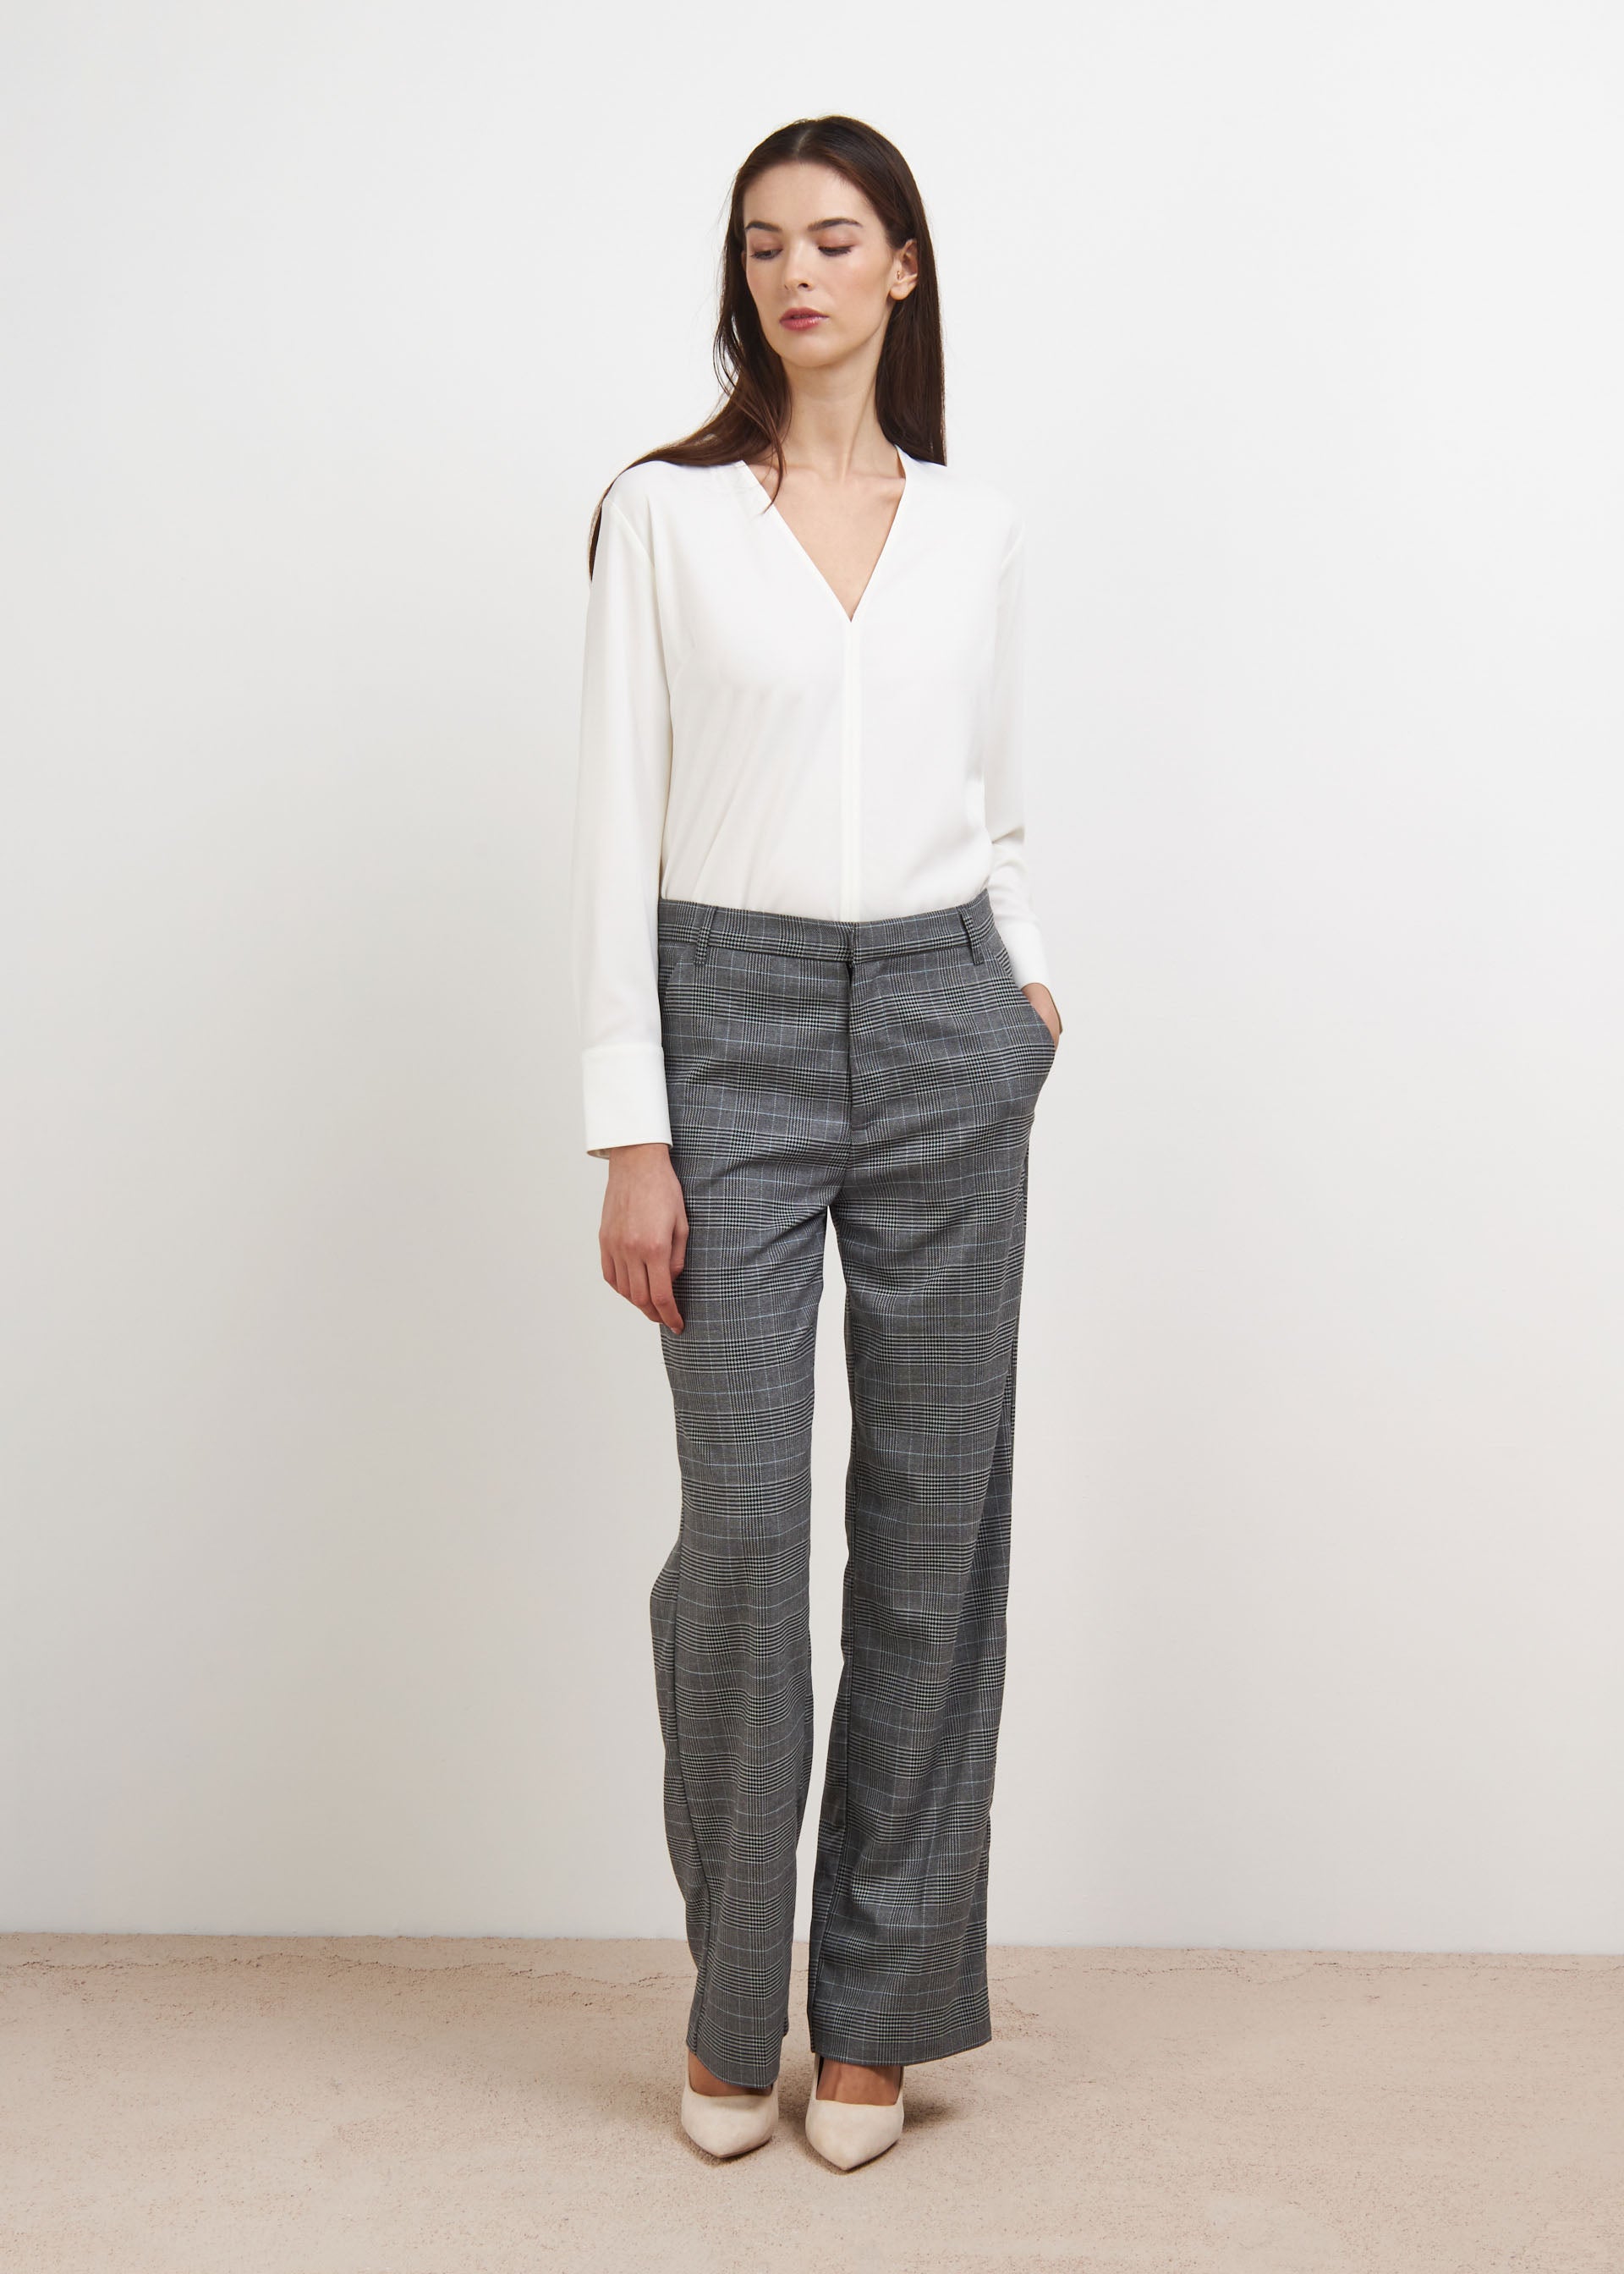 Marcs | Women's Plaid Habits Grey Pant